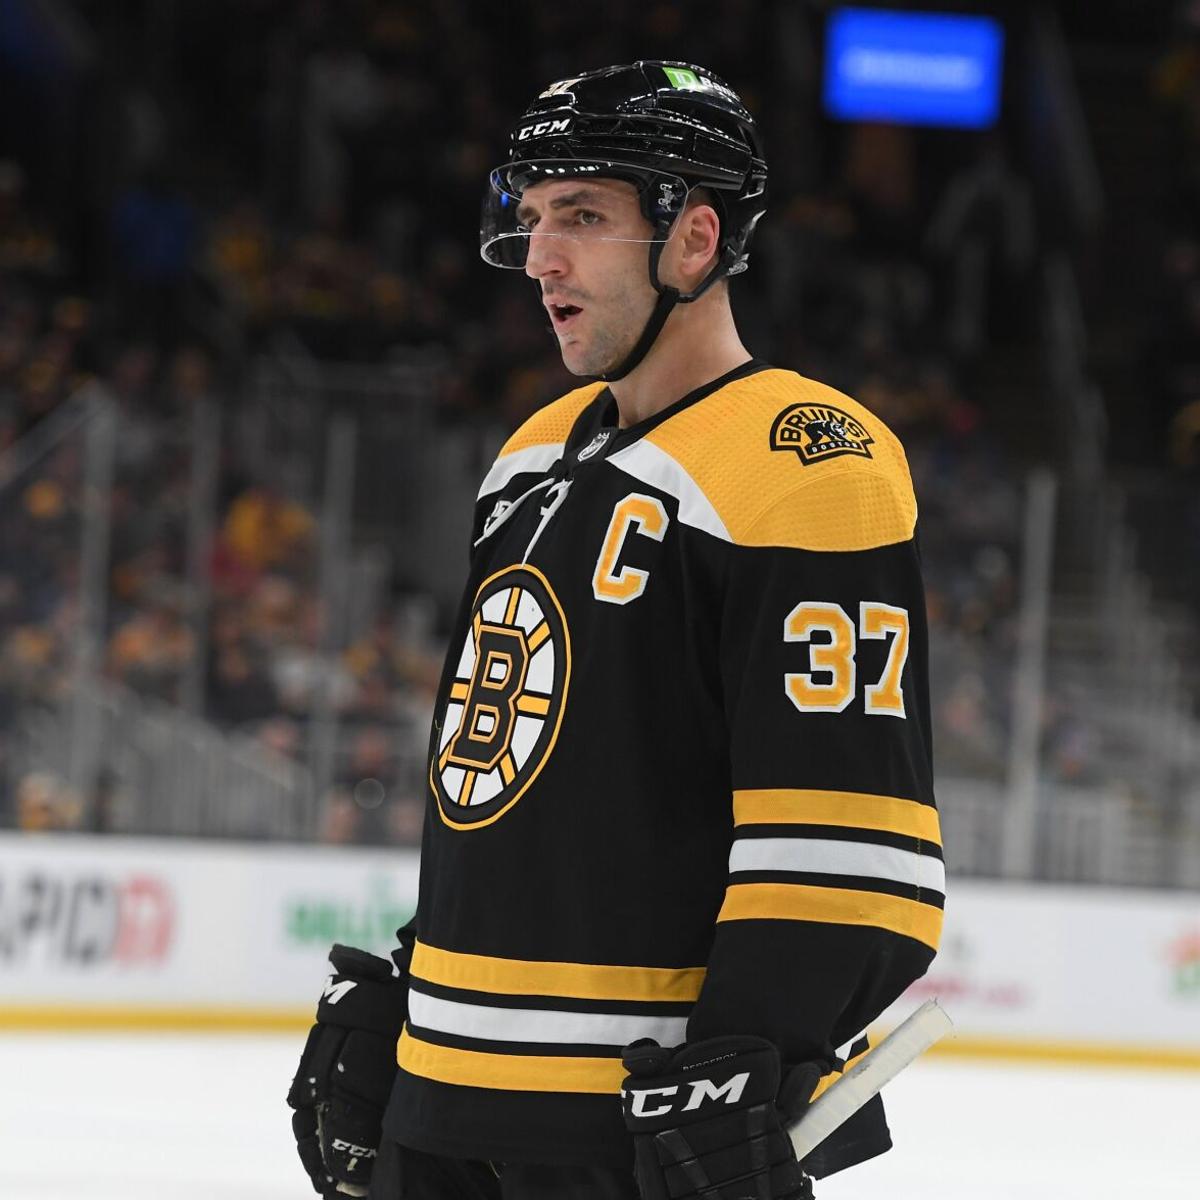 Boston Bruins Replica Home Jersey - Patrice Bergeron - Youth